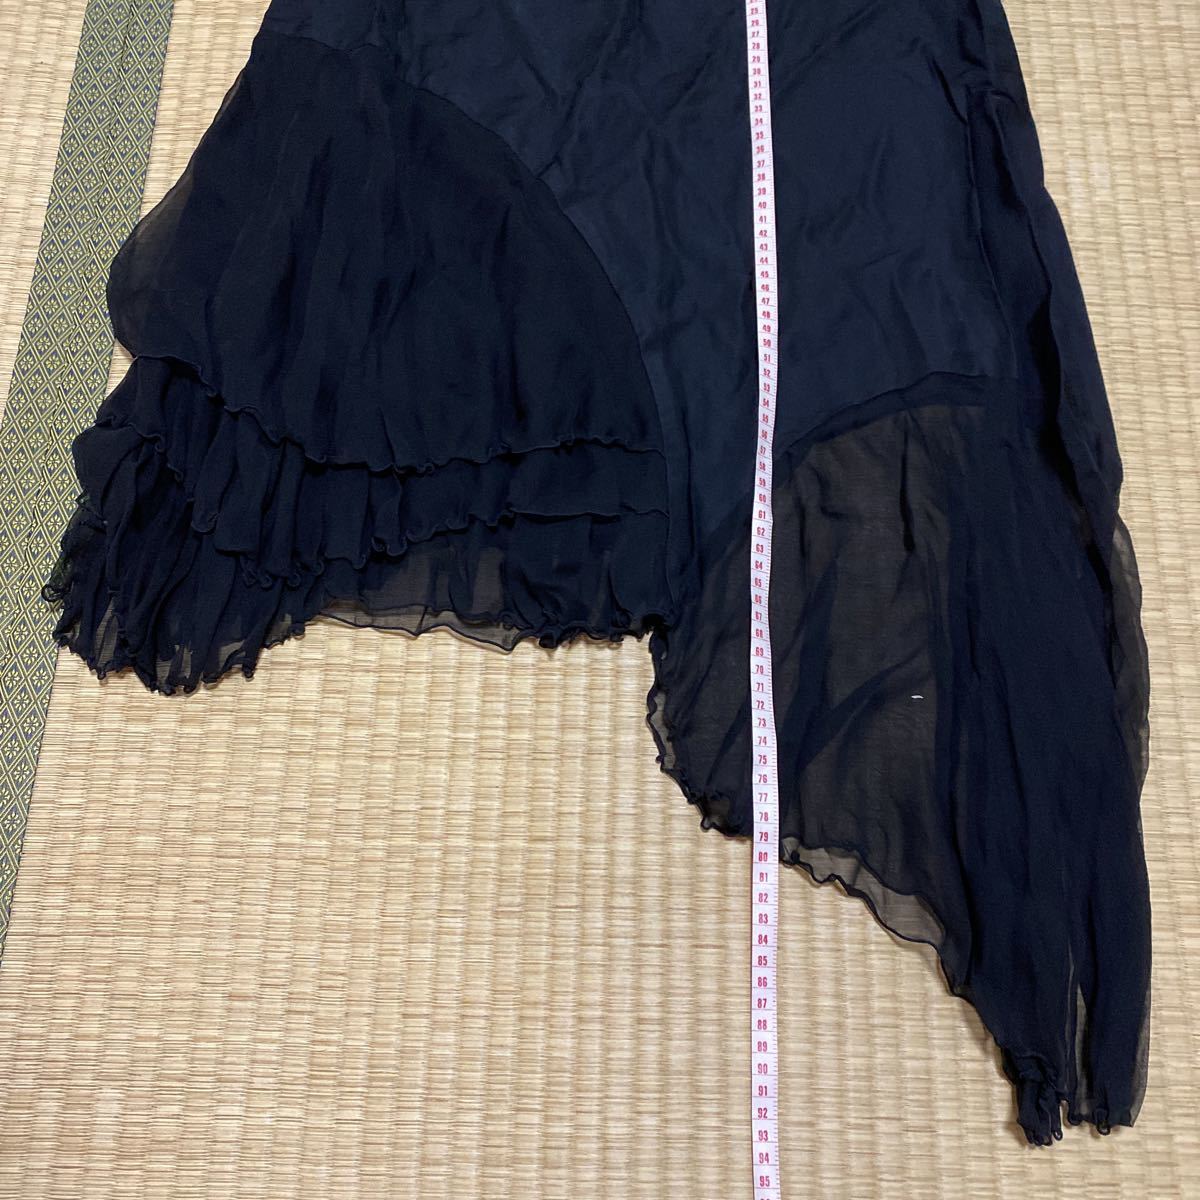 Seta ichiro セタ イチロー セタ イチロウ via bus stop ミラノコレクション 40 スカート ブラック 黒 アシンメトリー 変形スカート_画像4